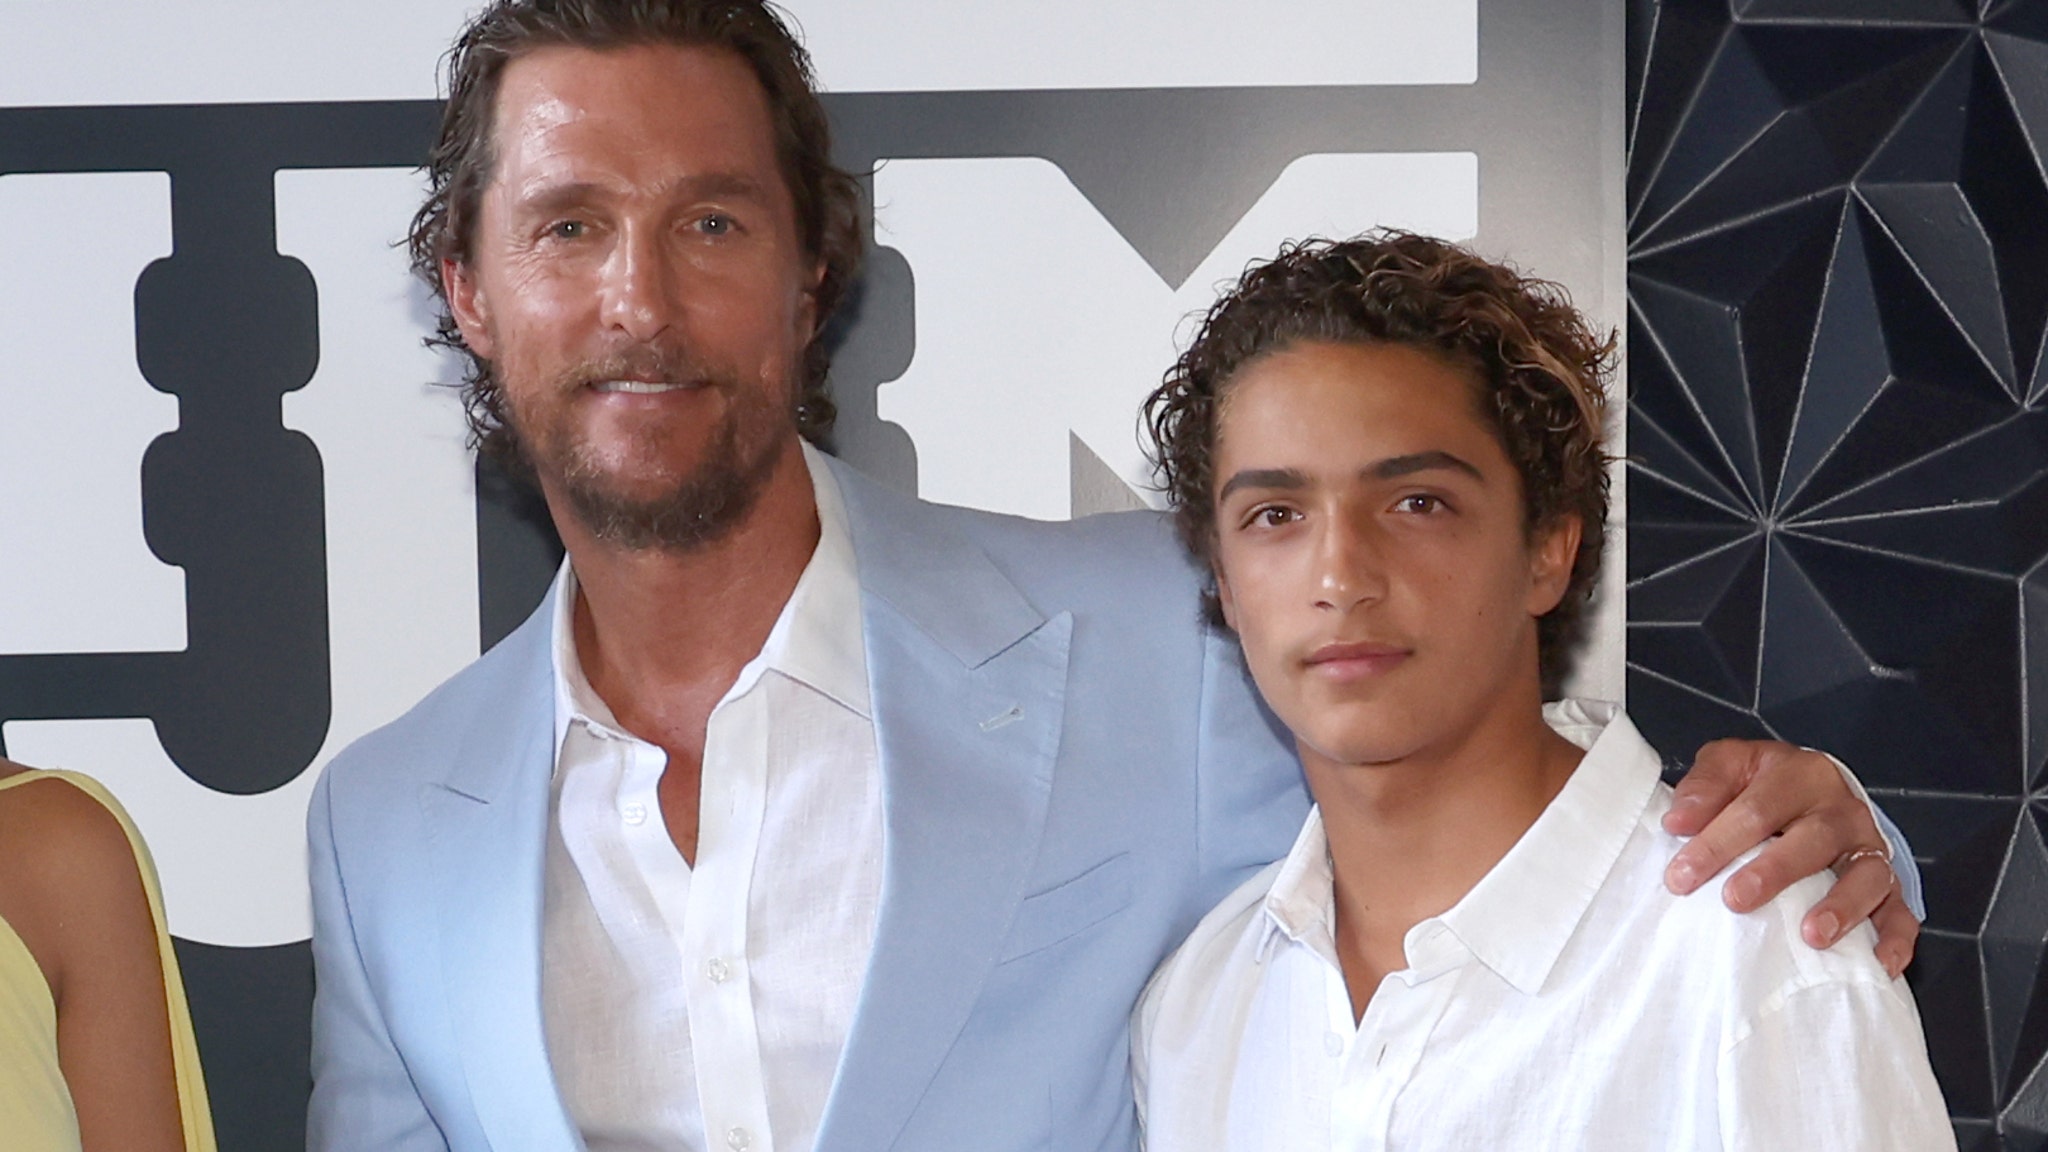 Matthew McConaughey Warns Son Against 'Traps' of Social Media